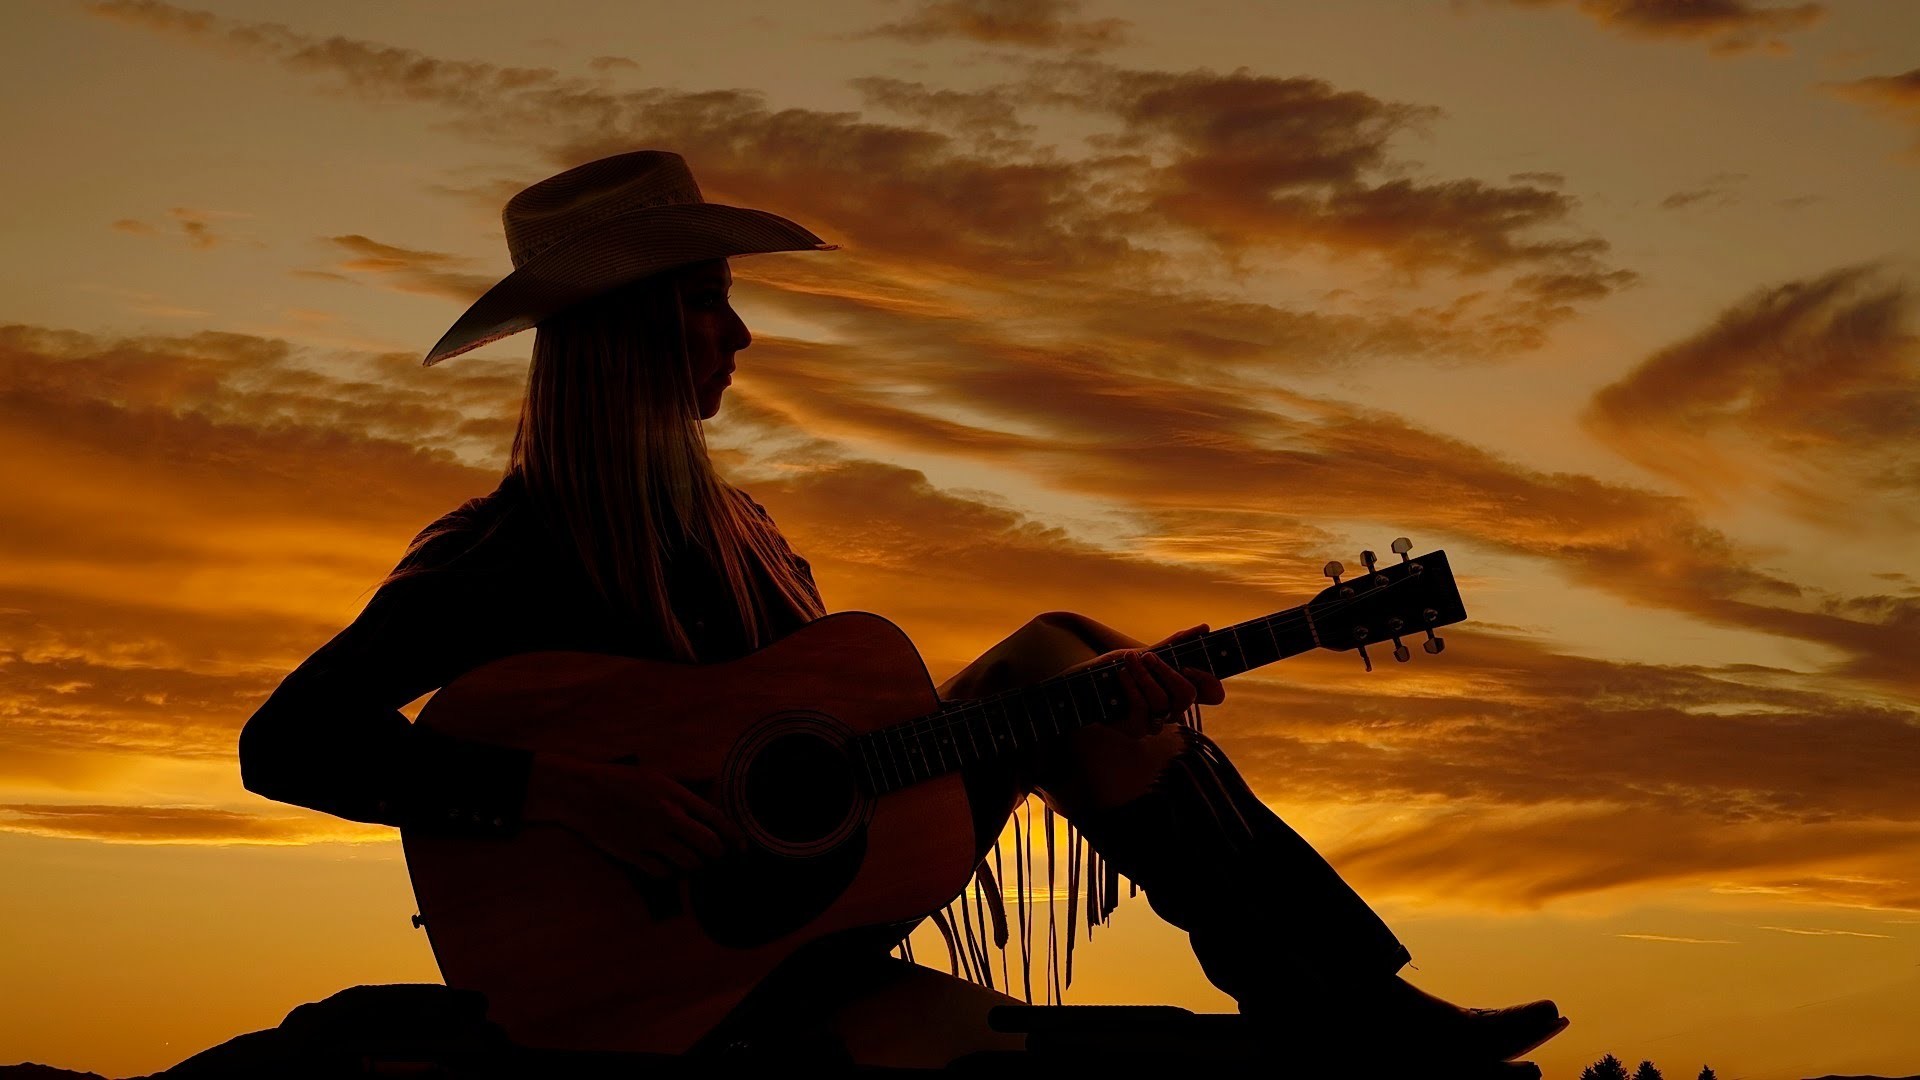 Country download. Гитарист на закате. Мужчина в шляпе с гитарой. Музыкант на закате. Ковбой на закате.